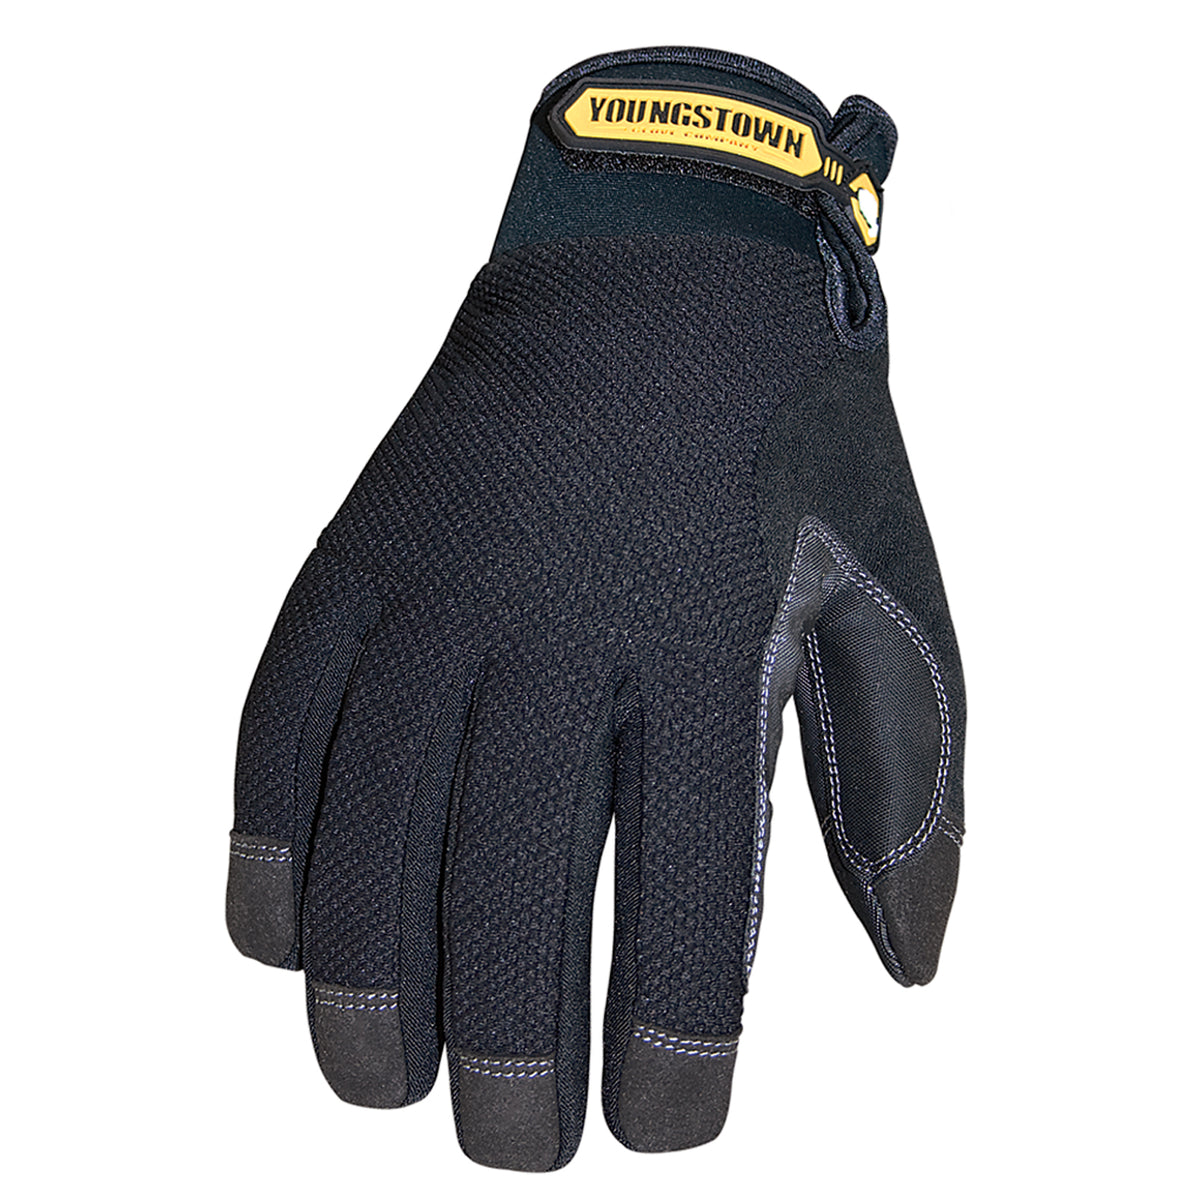 Winter Work Gloves For Men Heavy Duty Mechanic Gloves With Grip